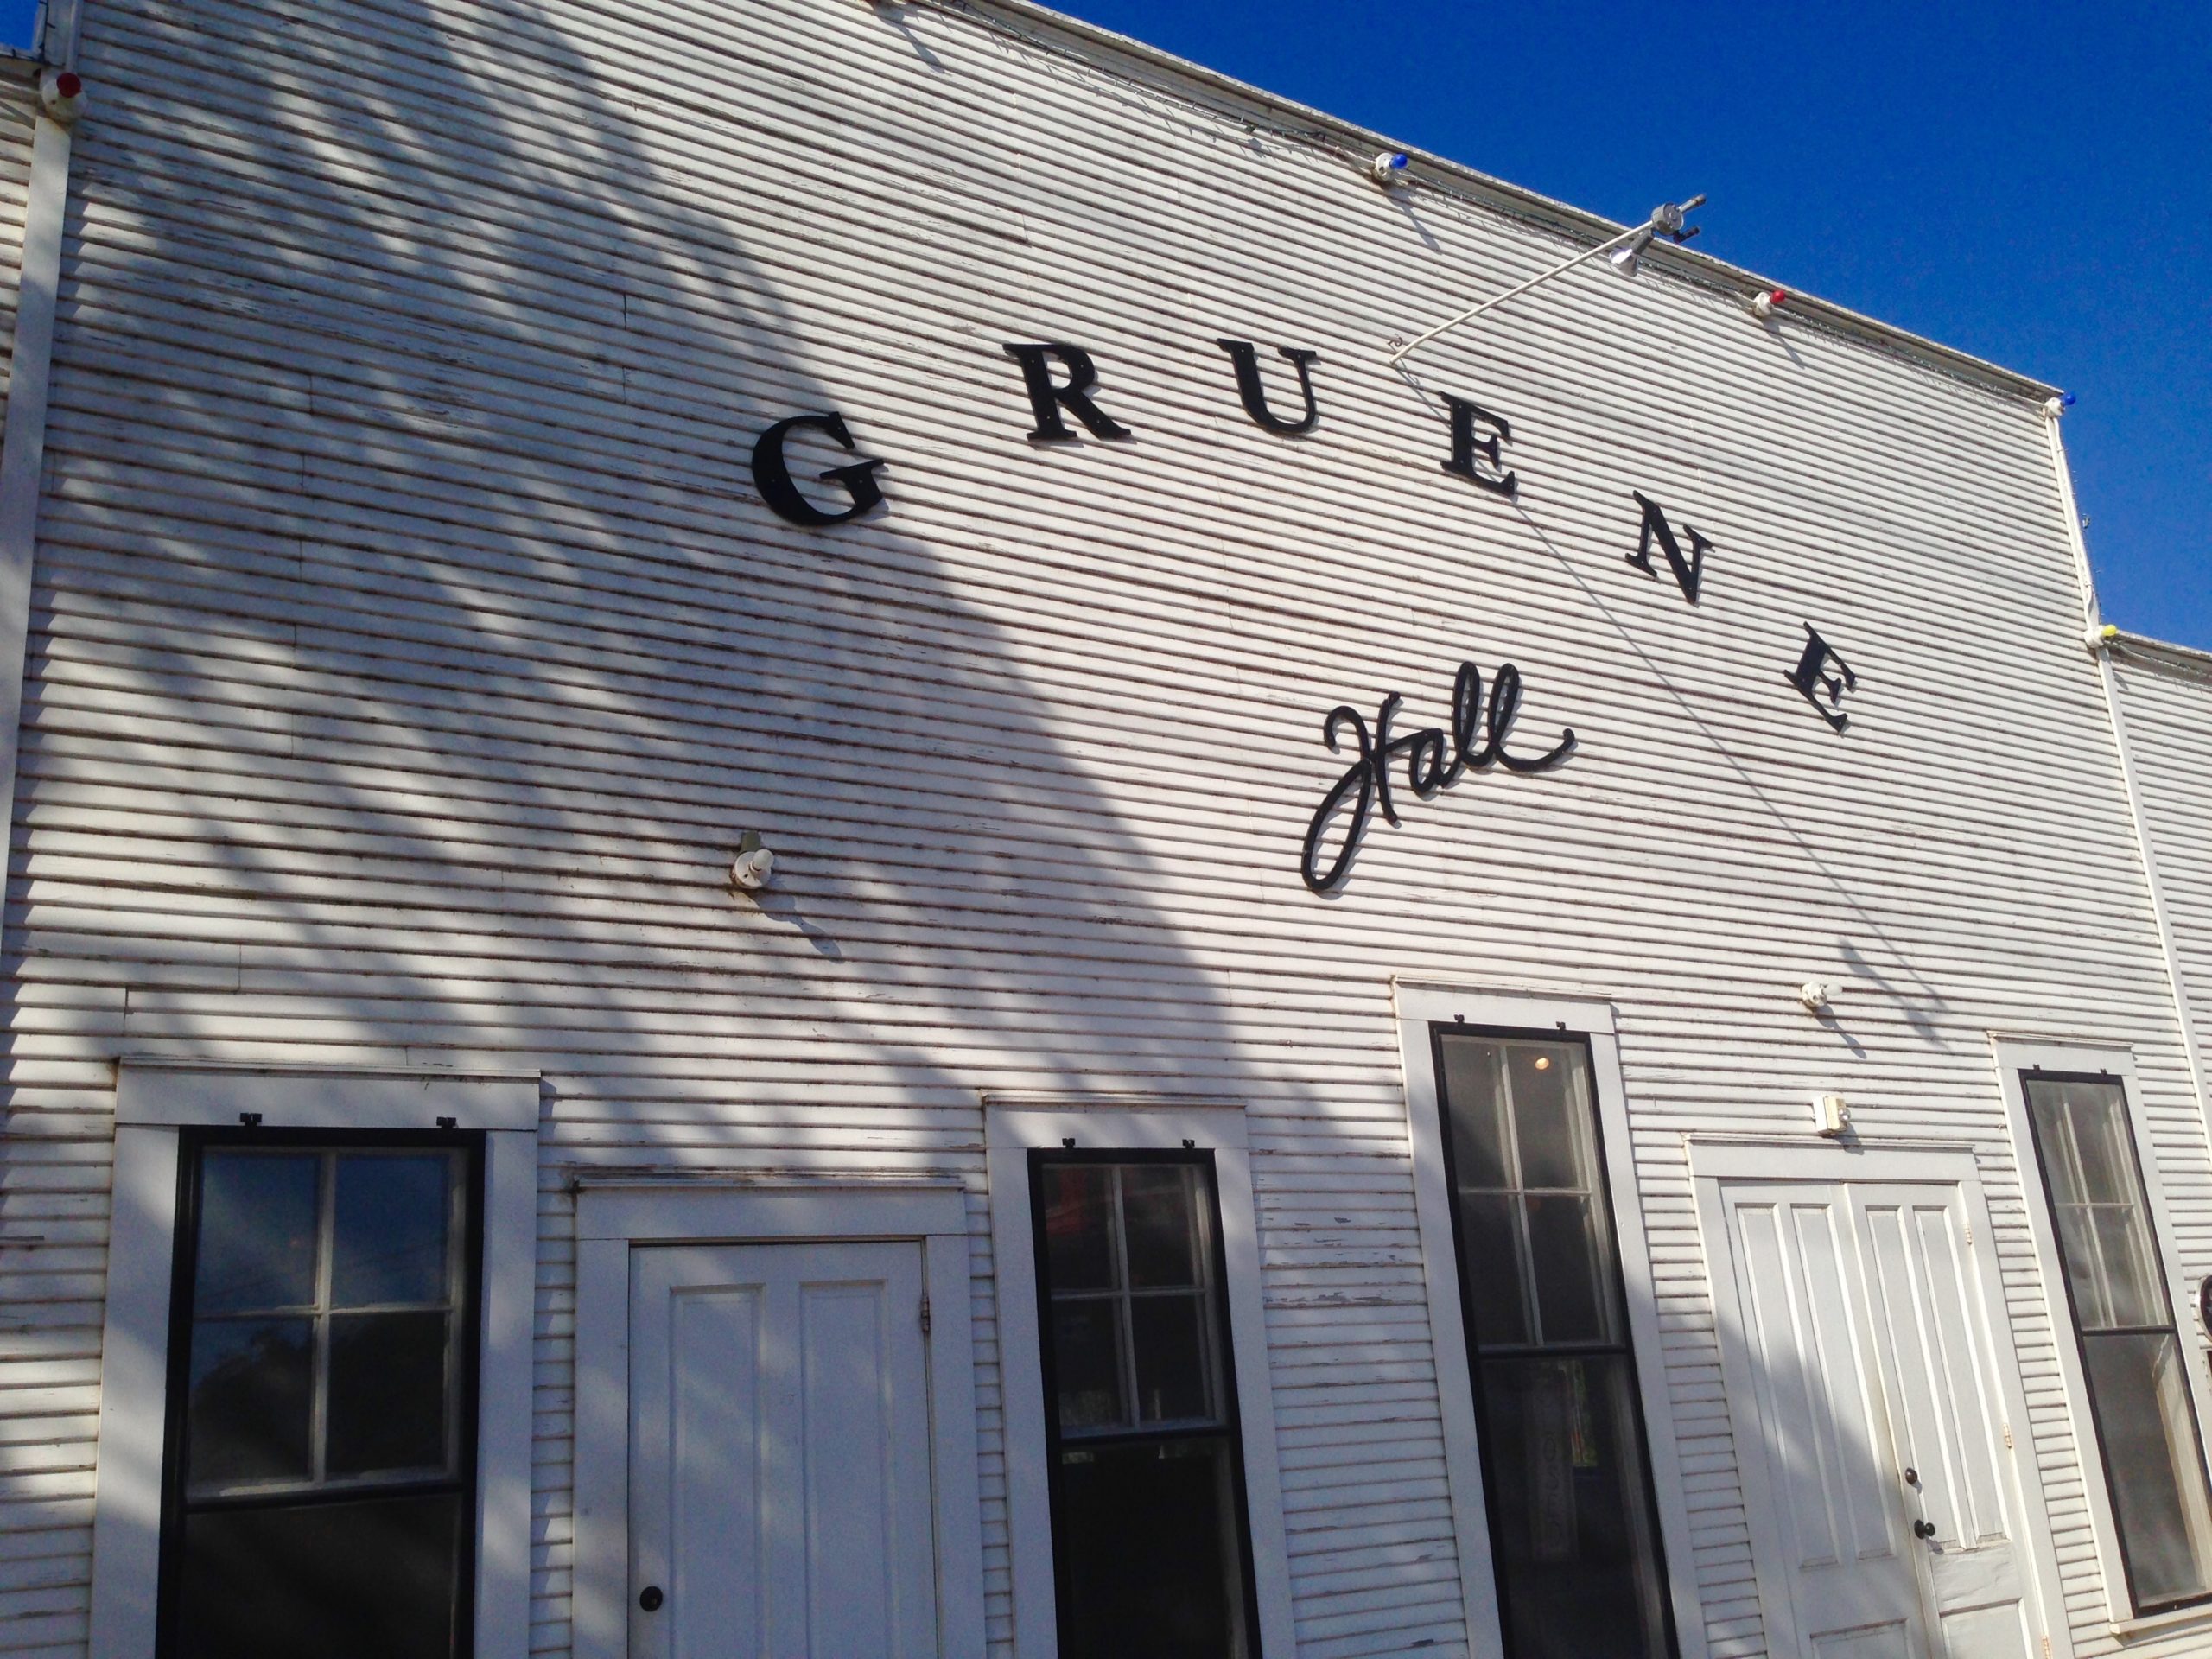 Gruene Hall in Gruene Texas